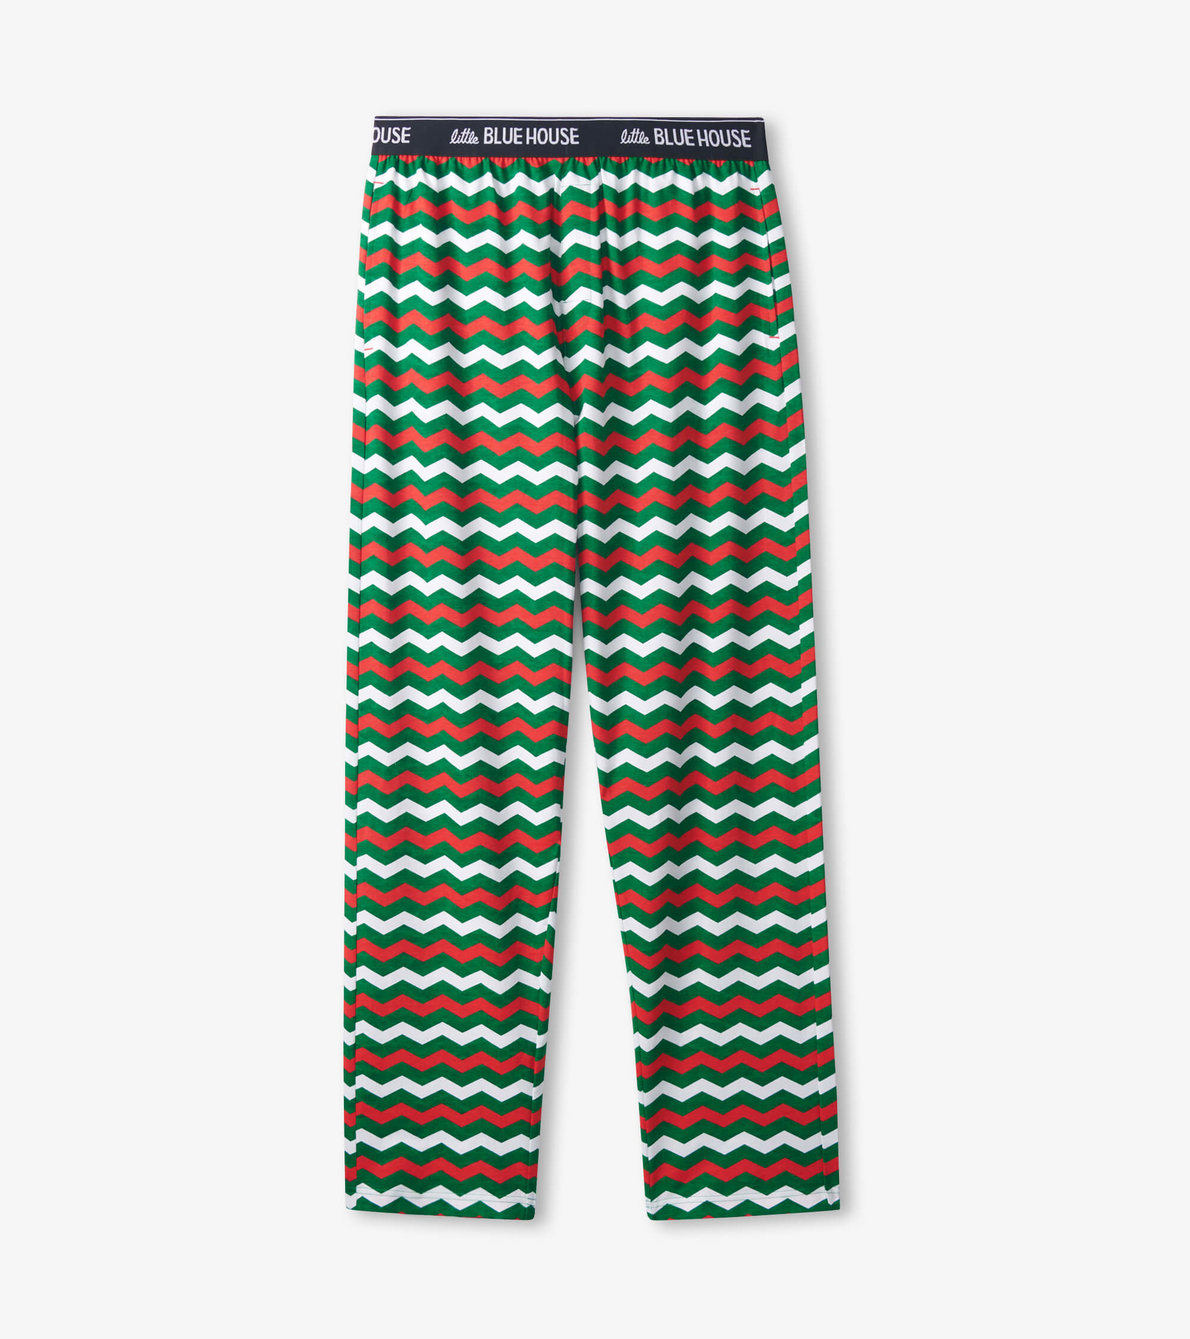 View larger image of Men's Christmas Zig-Zag Jersey Pajama Pants